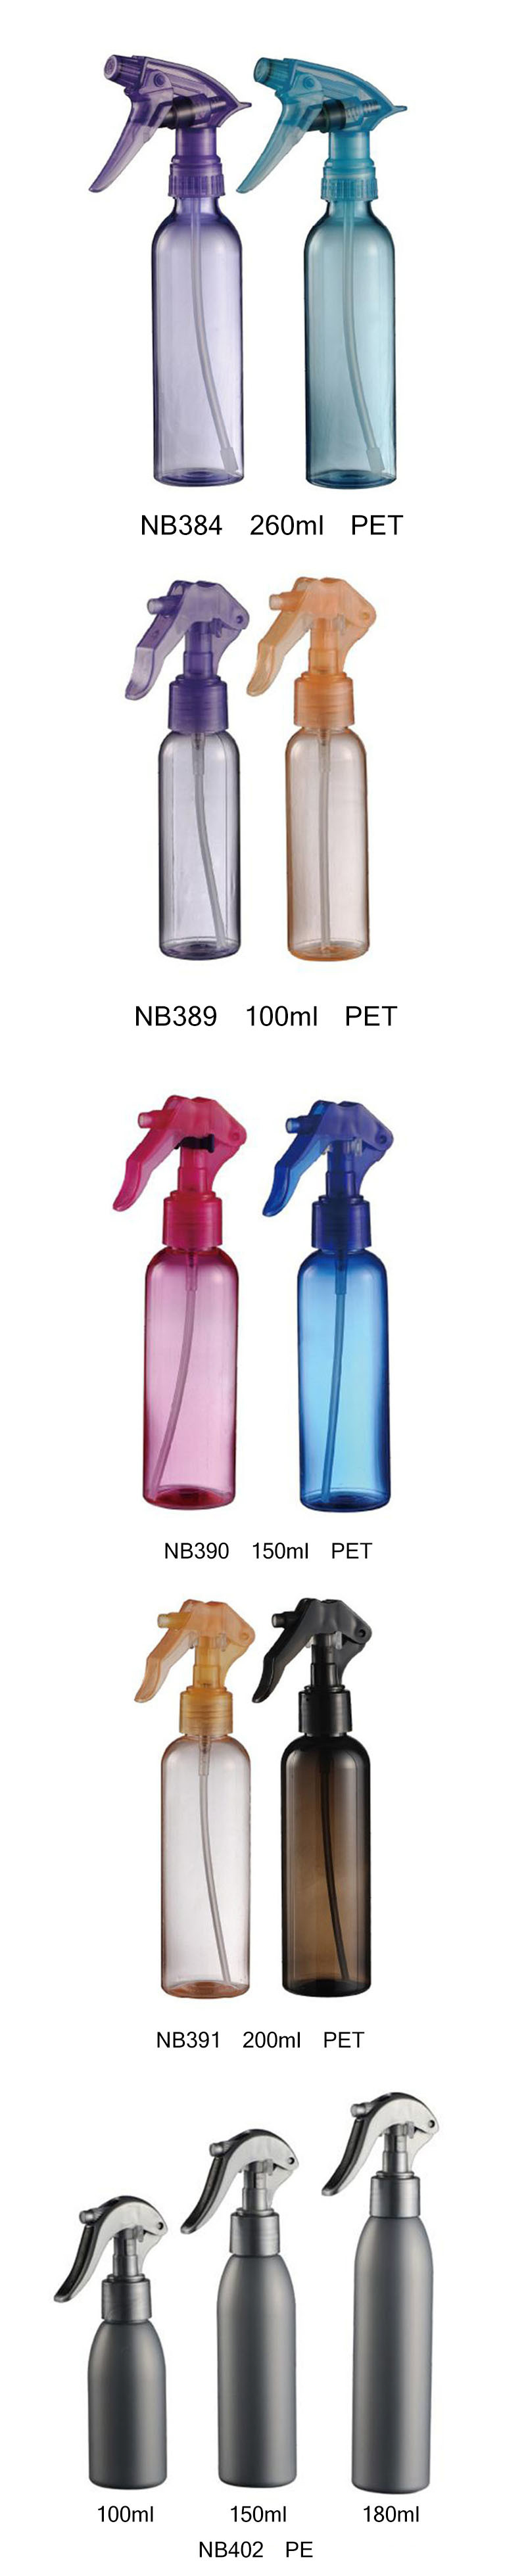 Plastic PE Trigger Sprayer Bottle for Cosmetics (NB402)